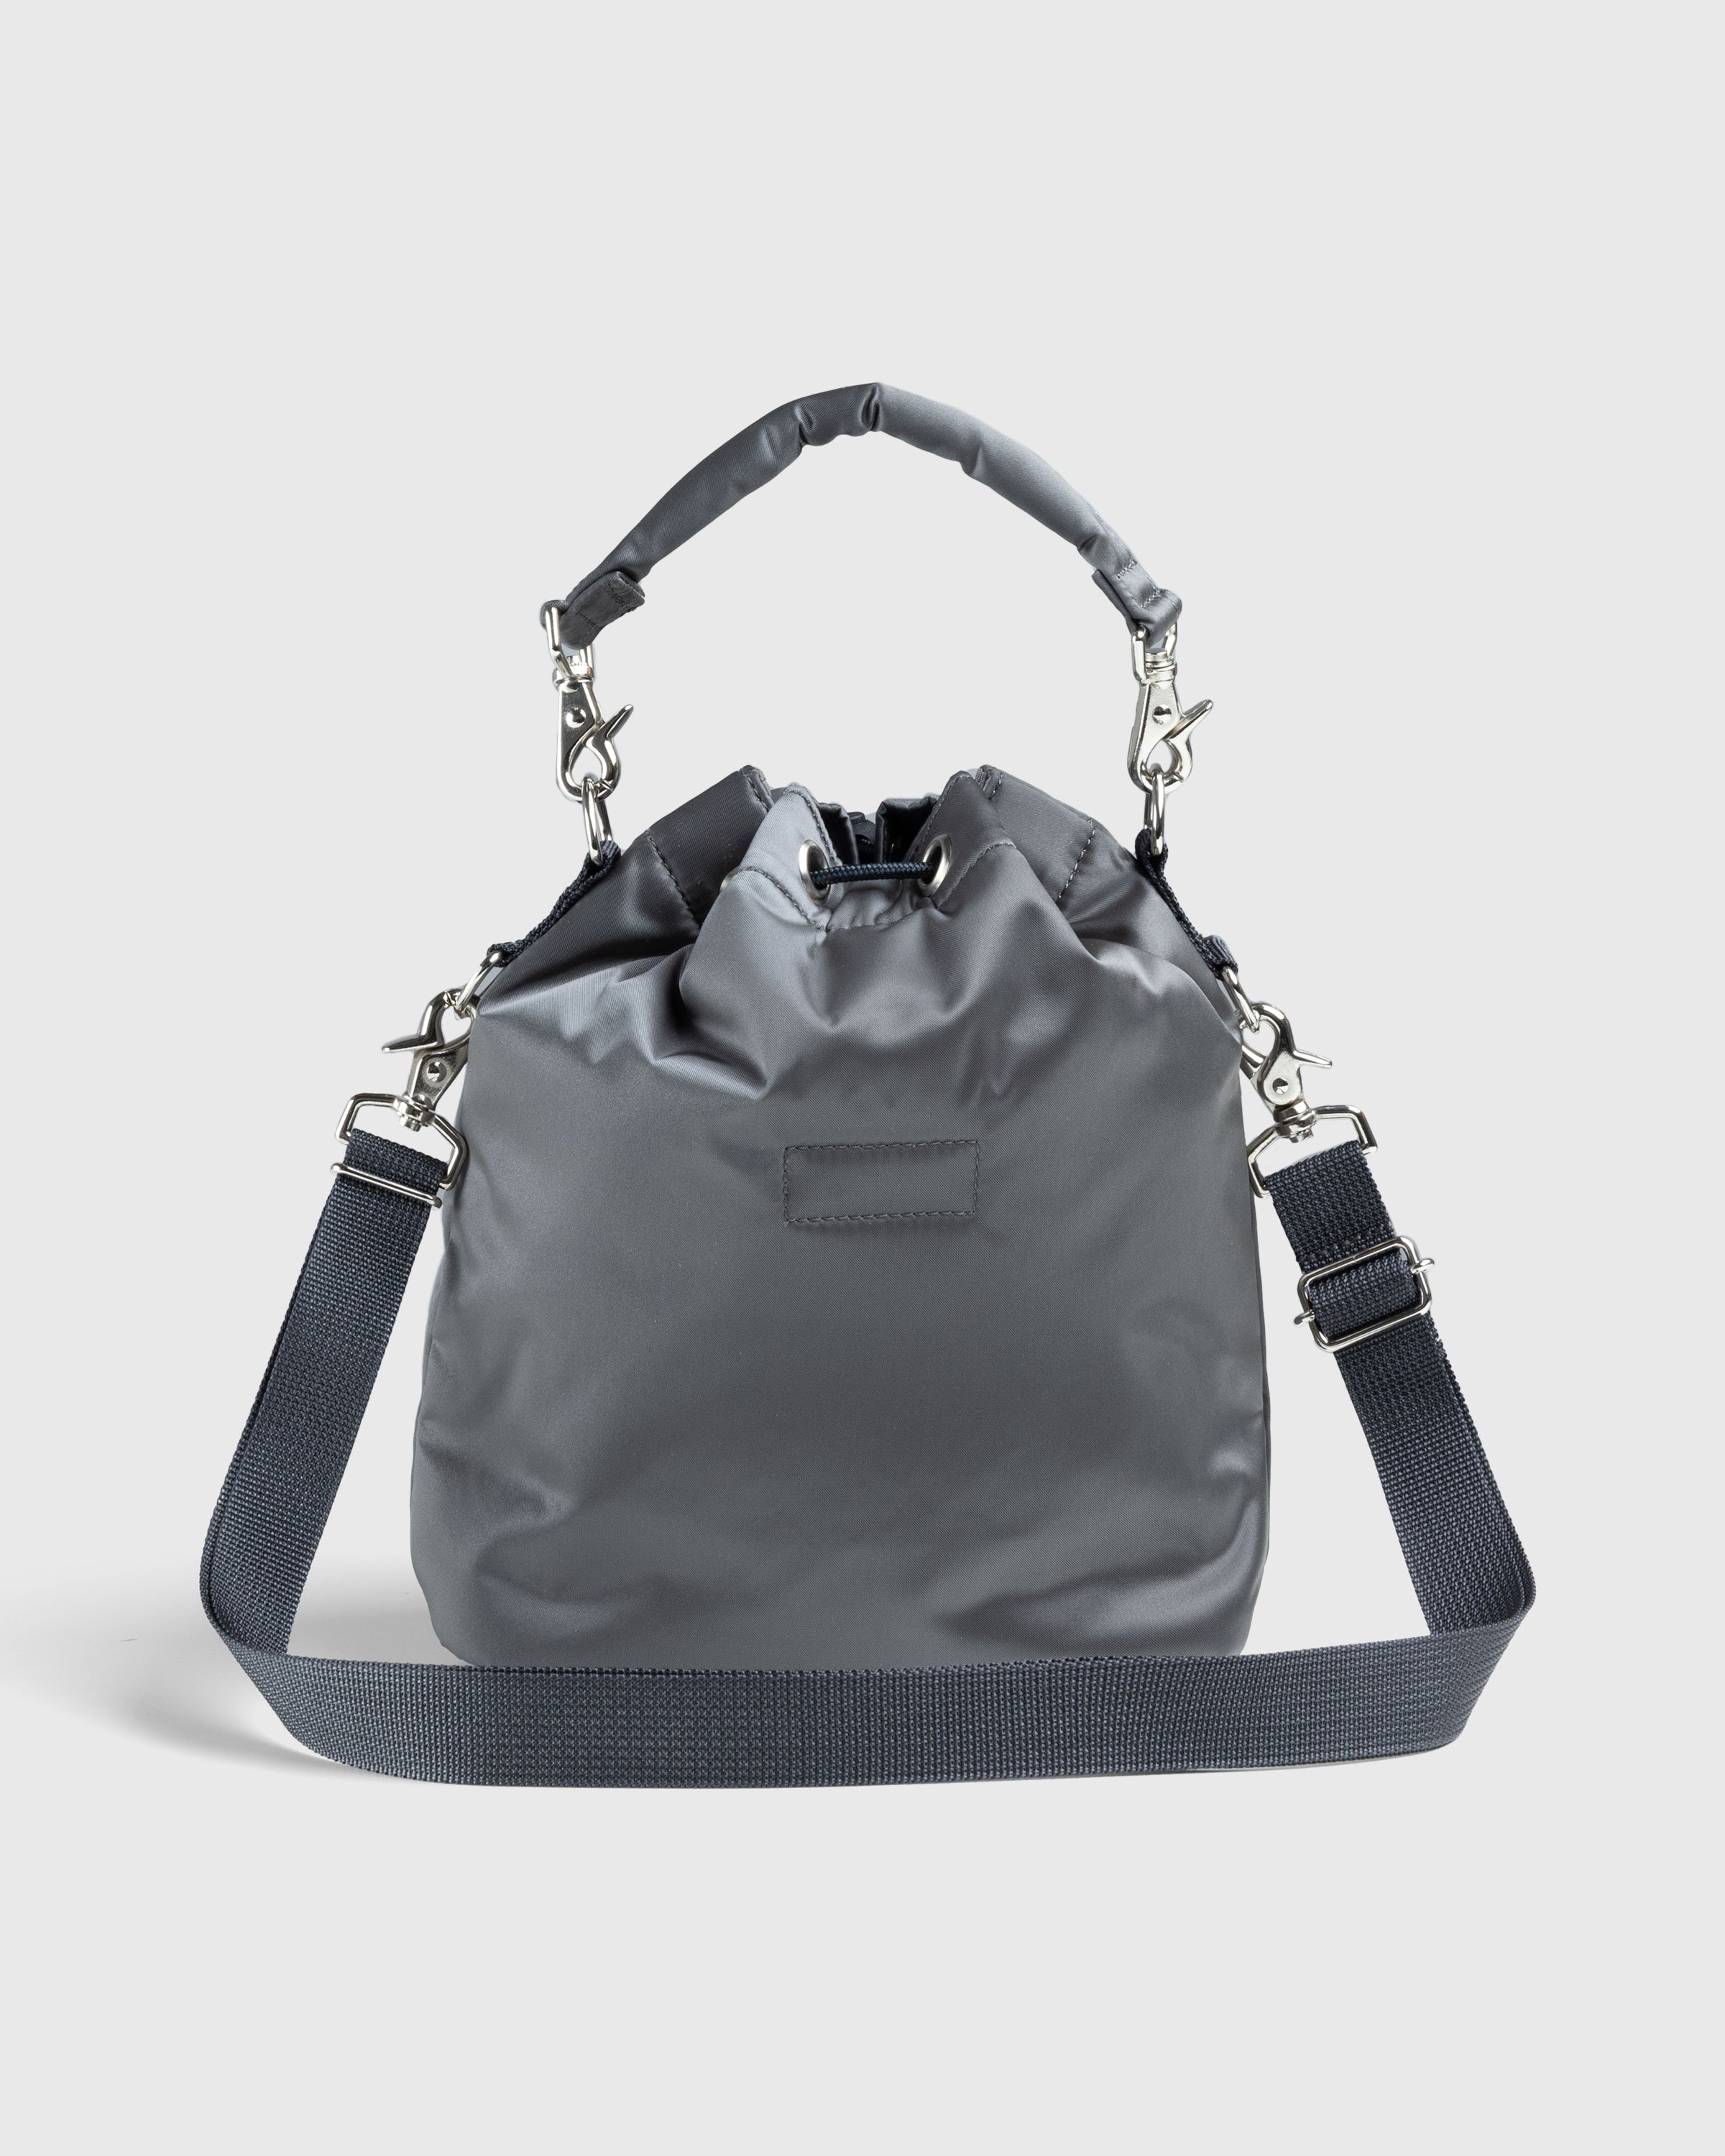 Porter-Yoshida & Co. - BALLOON BAG (S) - Accessories - Grey - Image 2